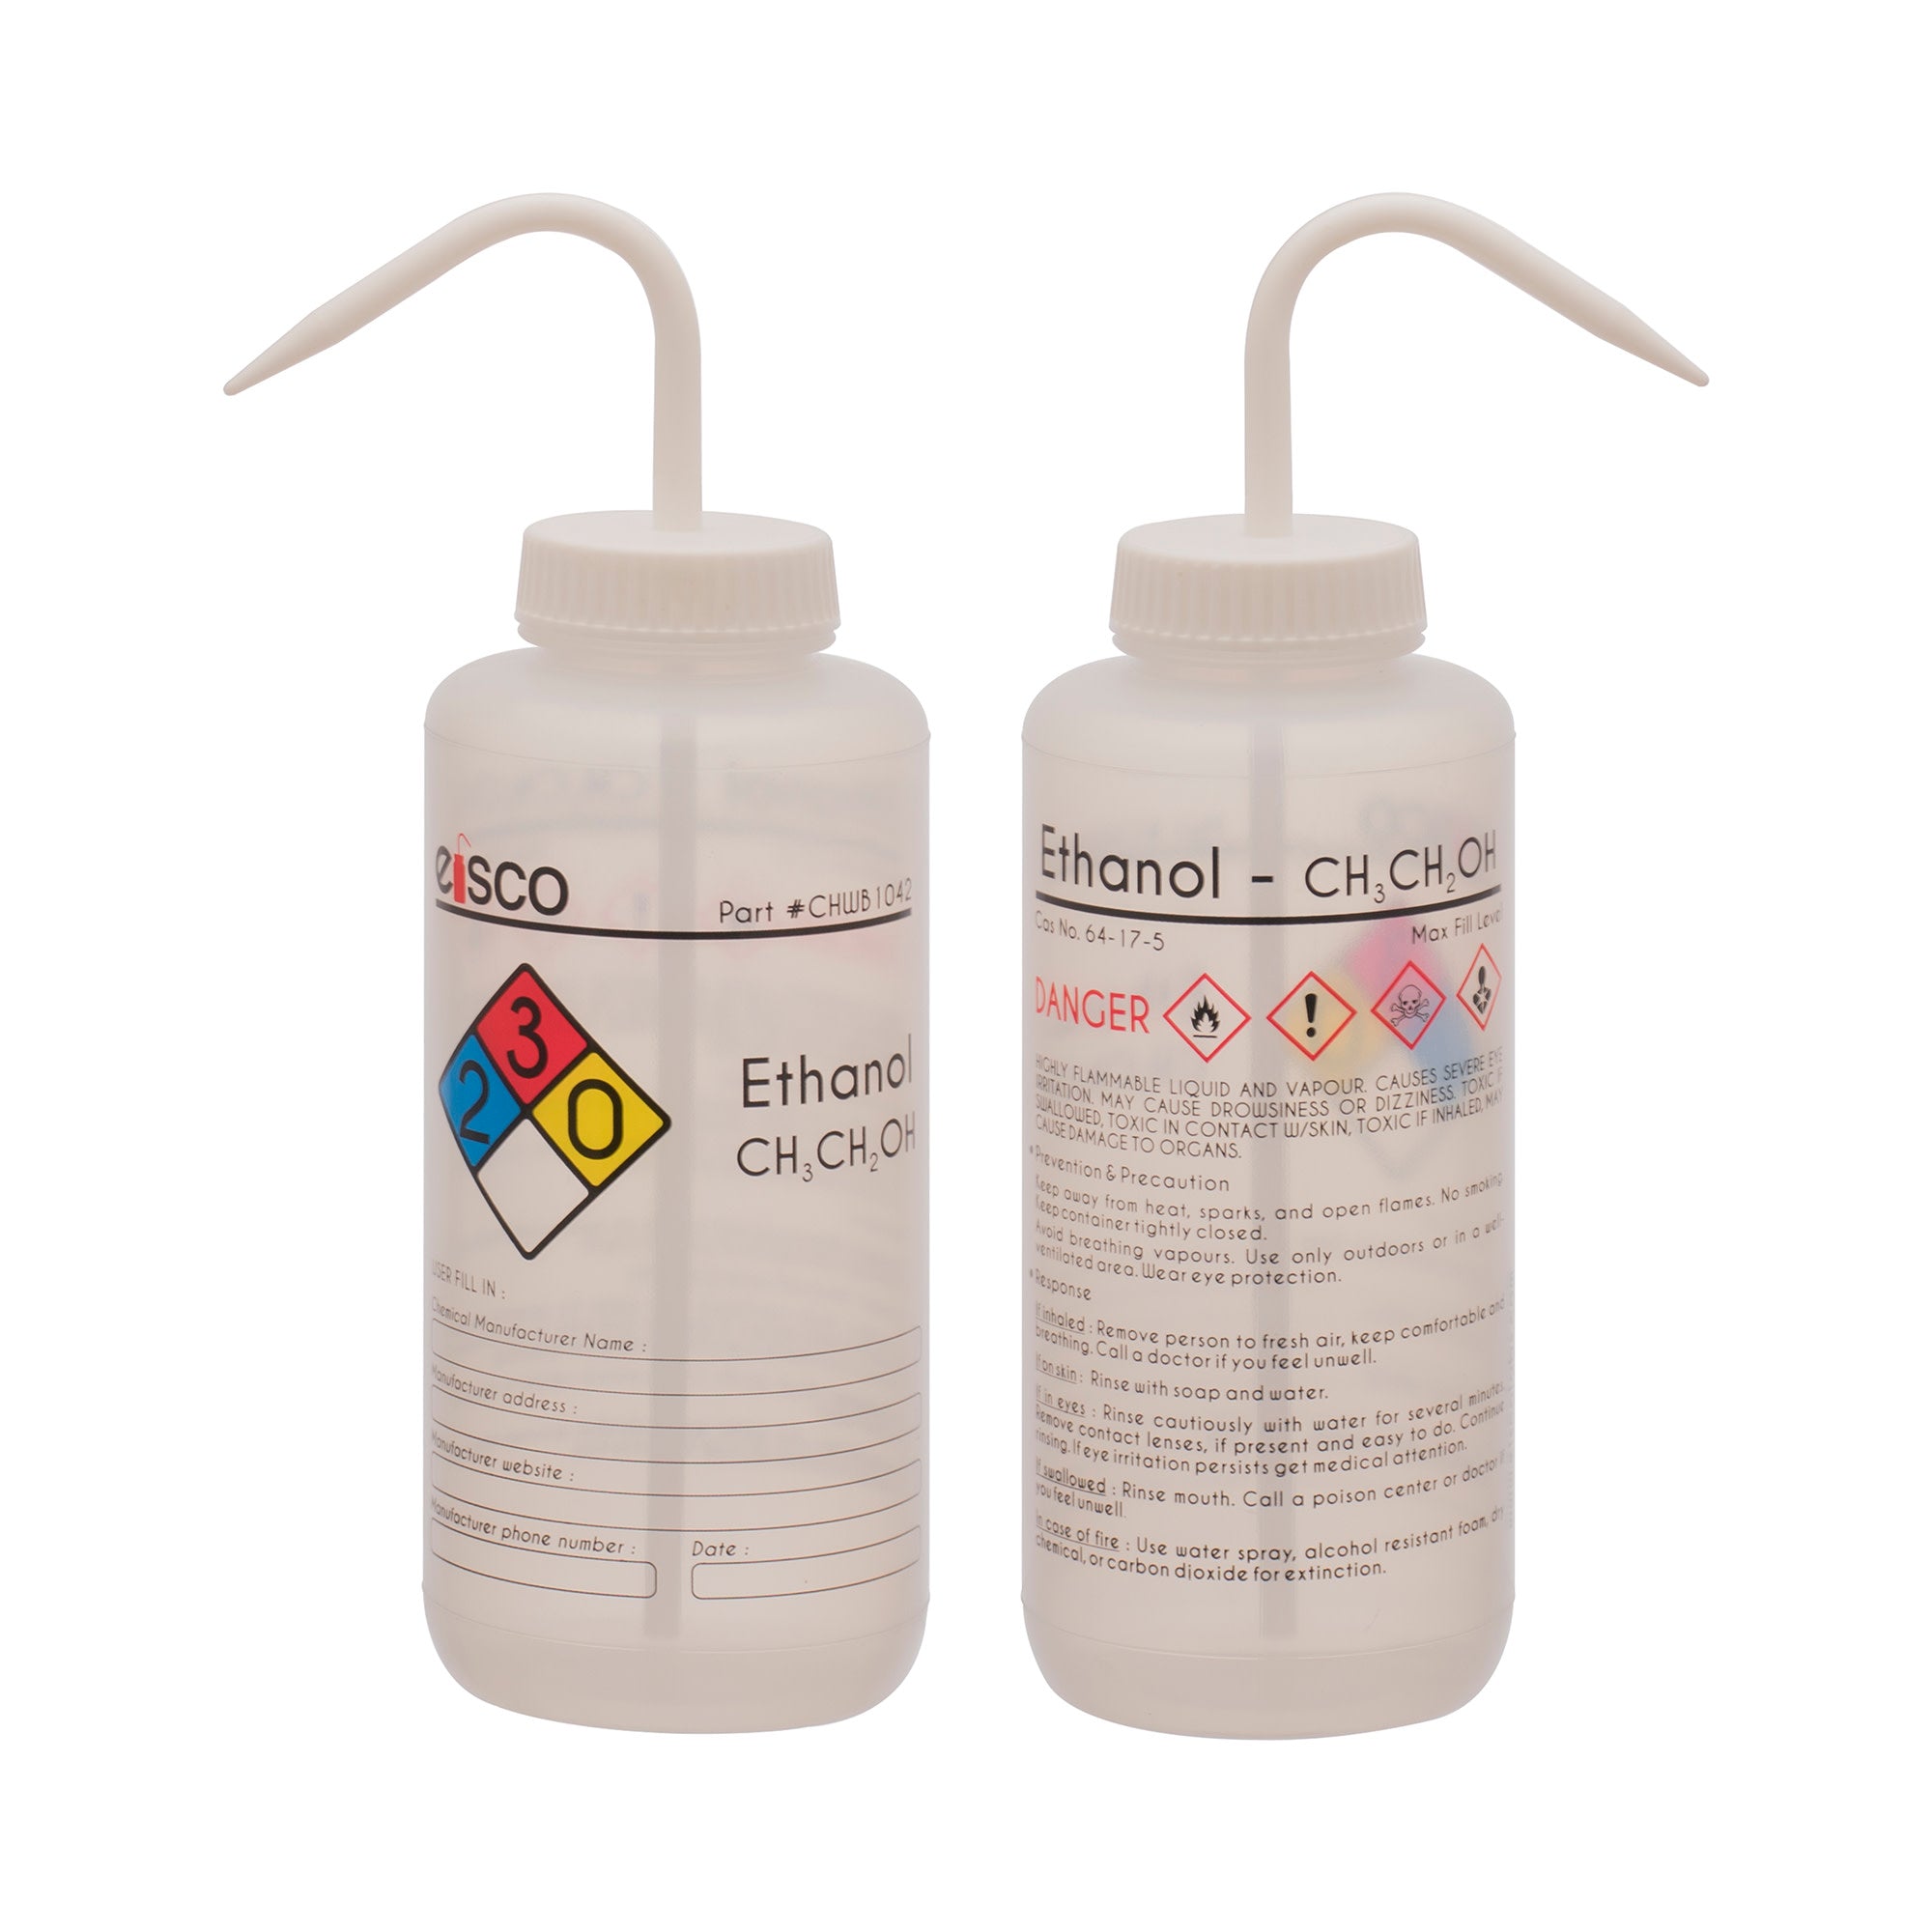 2PK Performance Plastic Wash Bottle, Ethanol, 1000 ml - Labeled (4 Color)